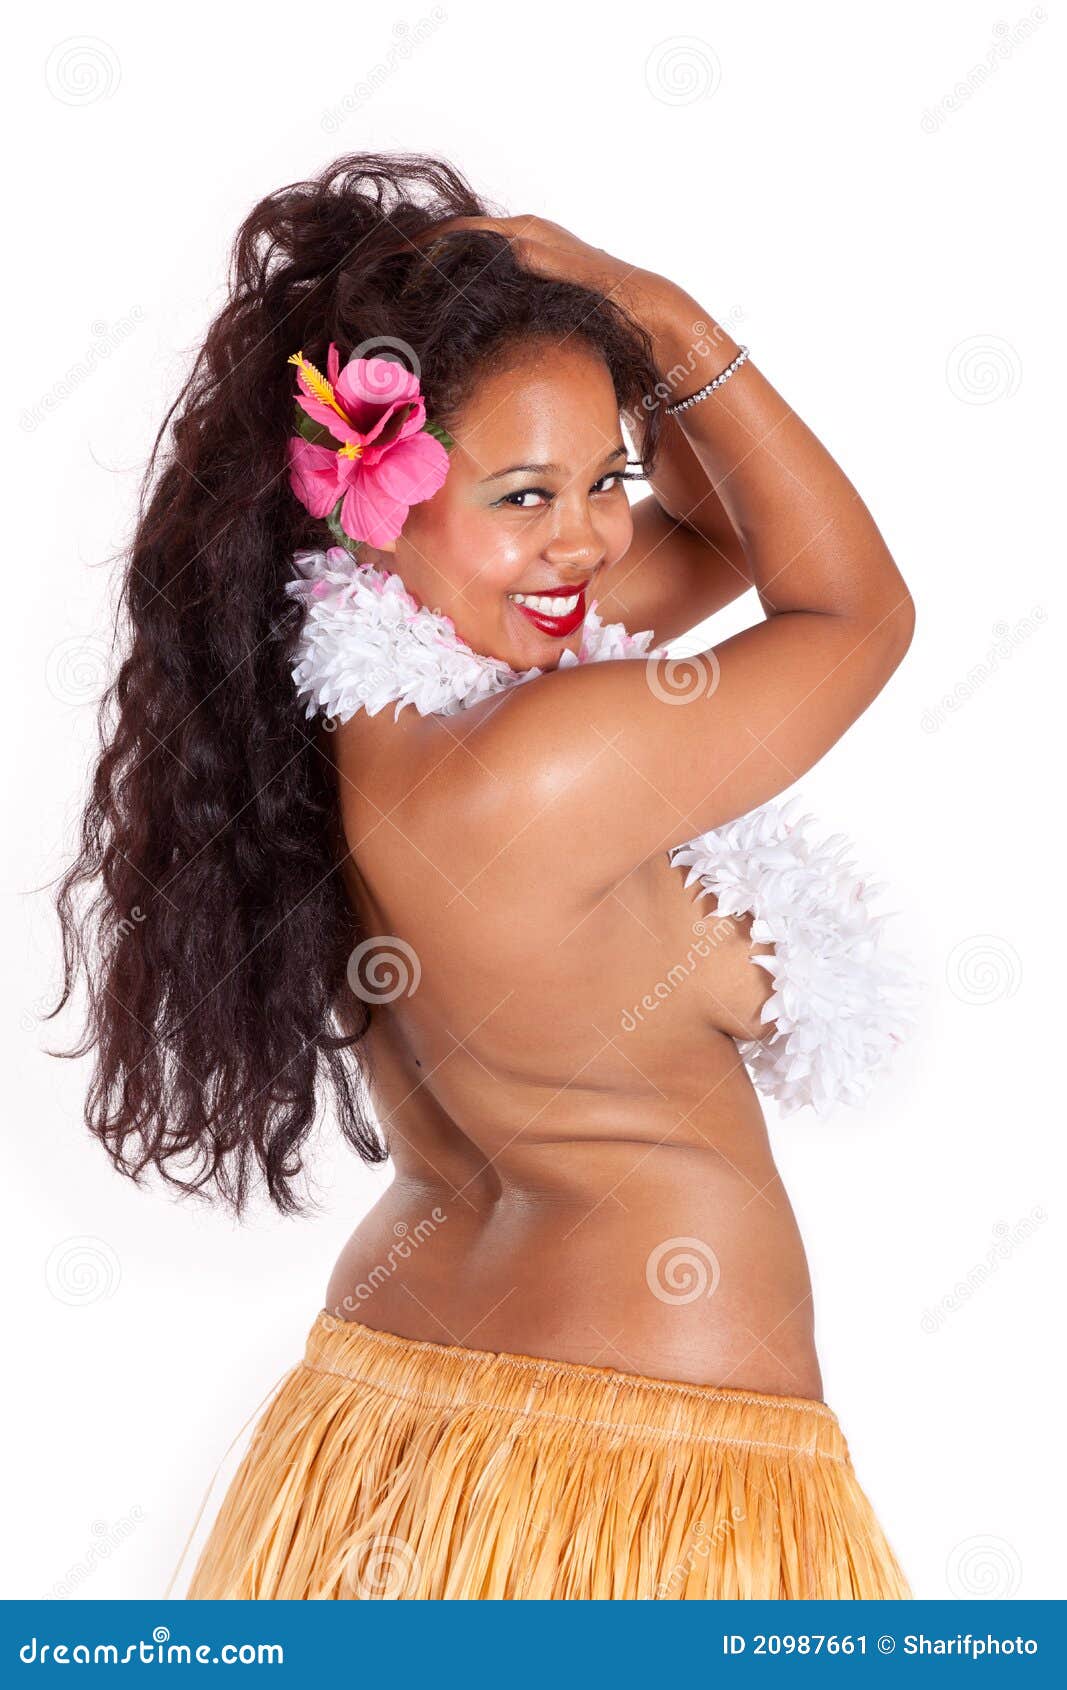 diana bailey thompson share topless hula dancing photos